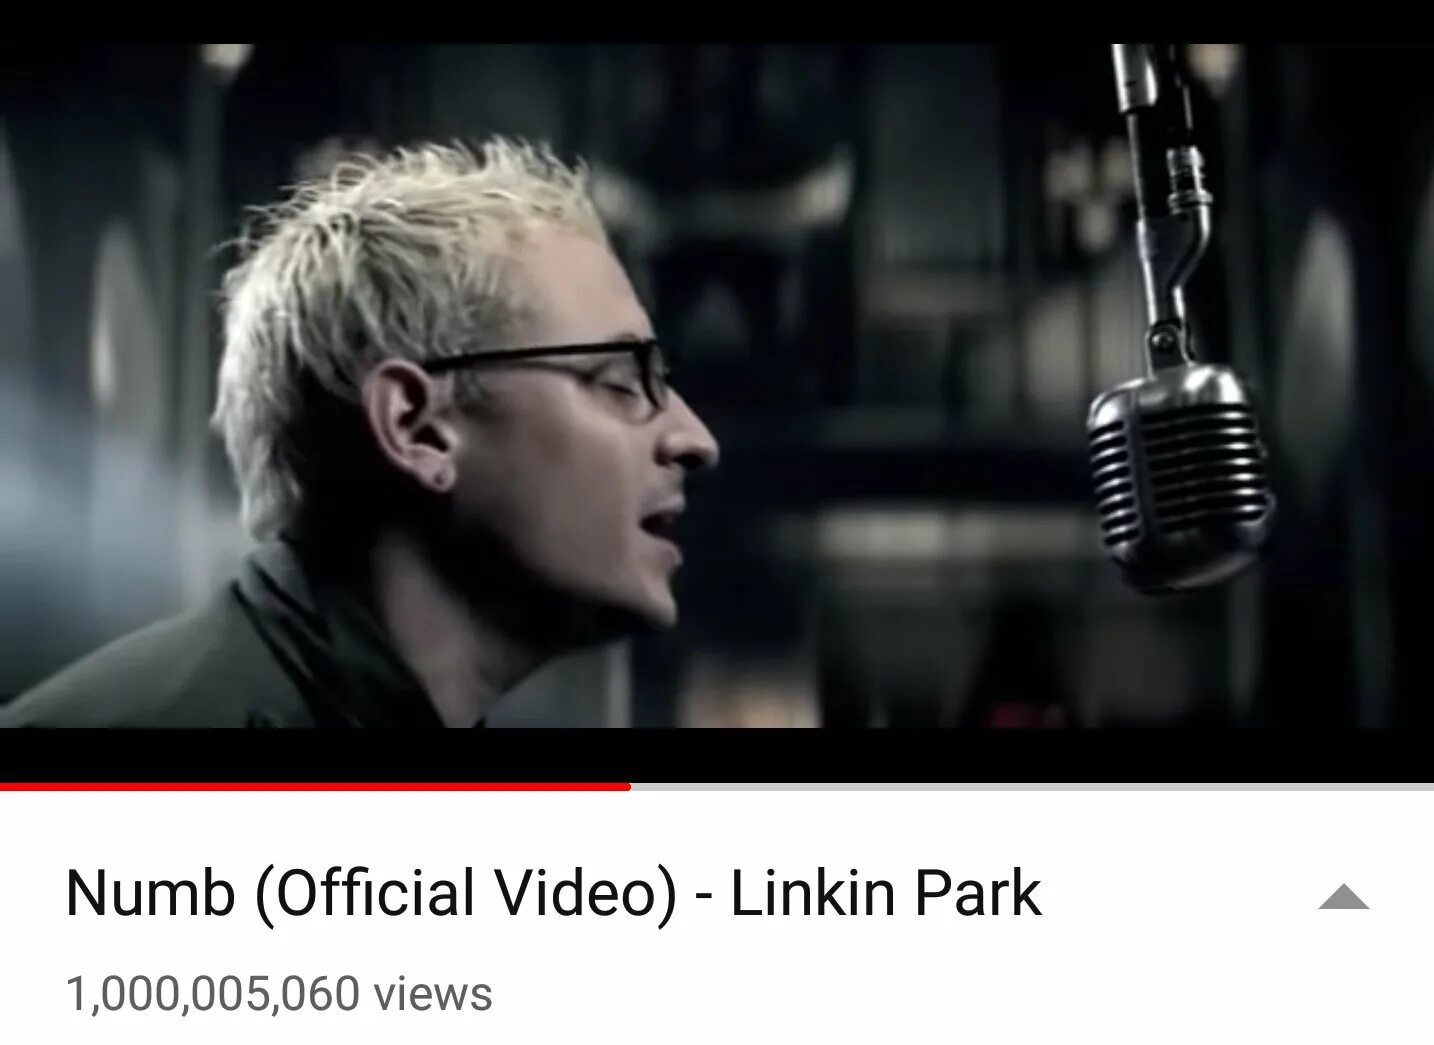 Линкин парк Numb. Linkin Park Numb Честер. Linkin Park - Numb (2002). Честер Беннингтон намб. Песня намб линкин парк